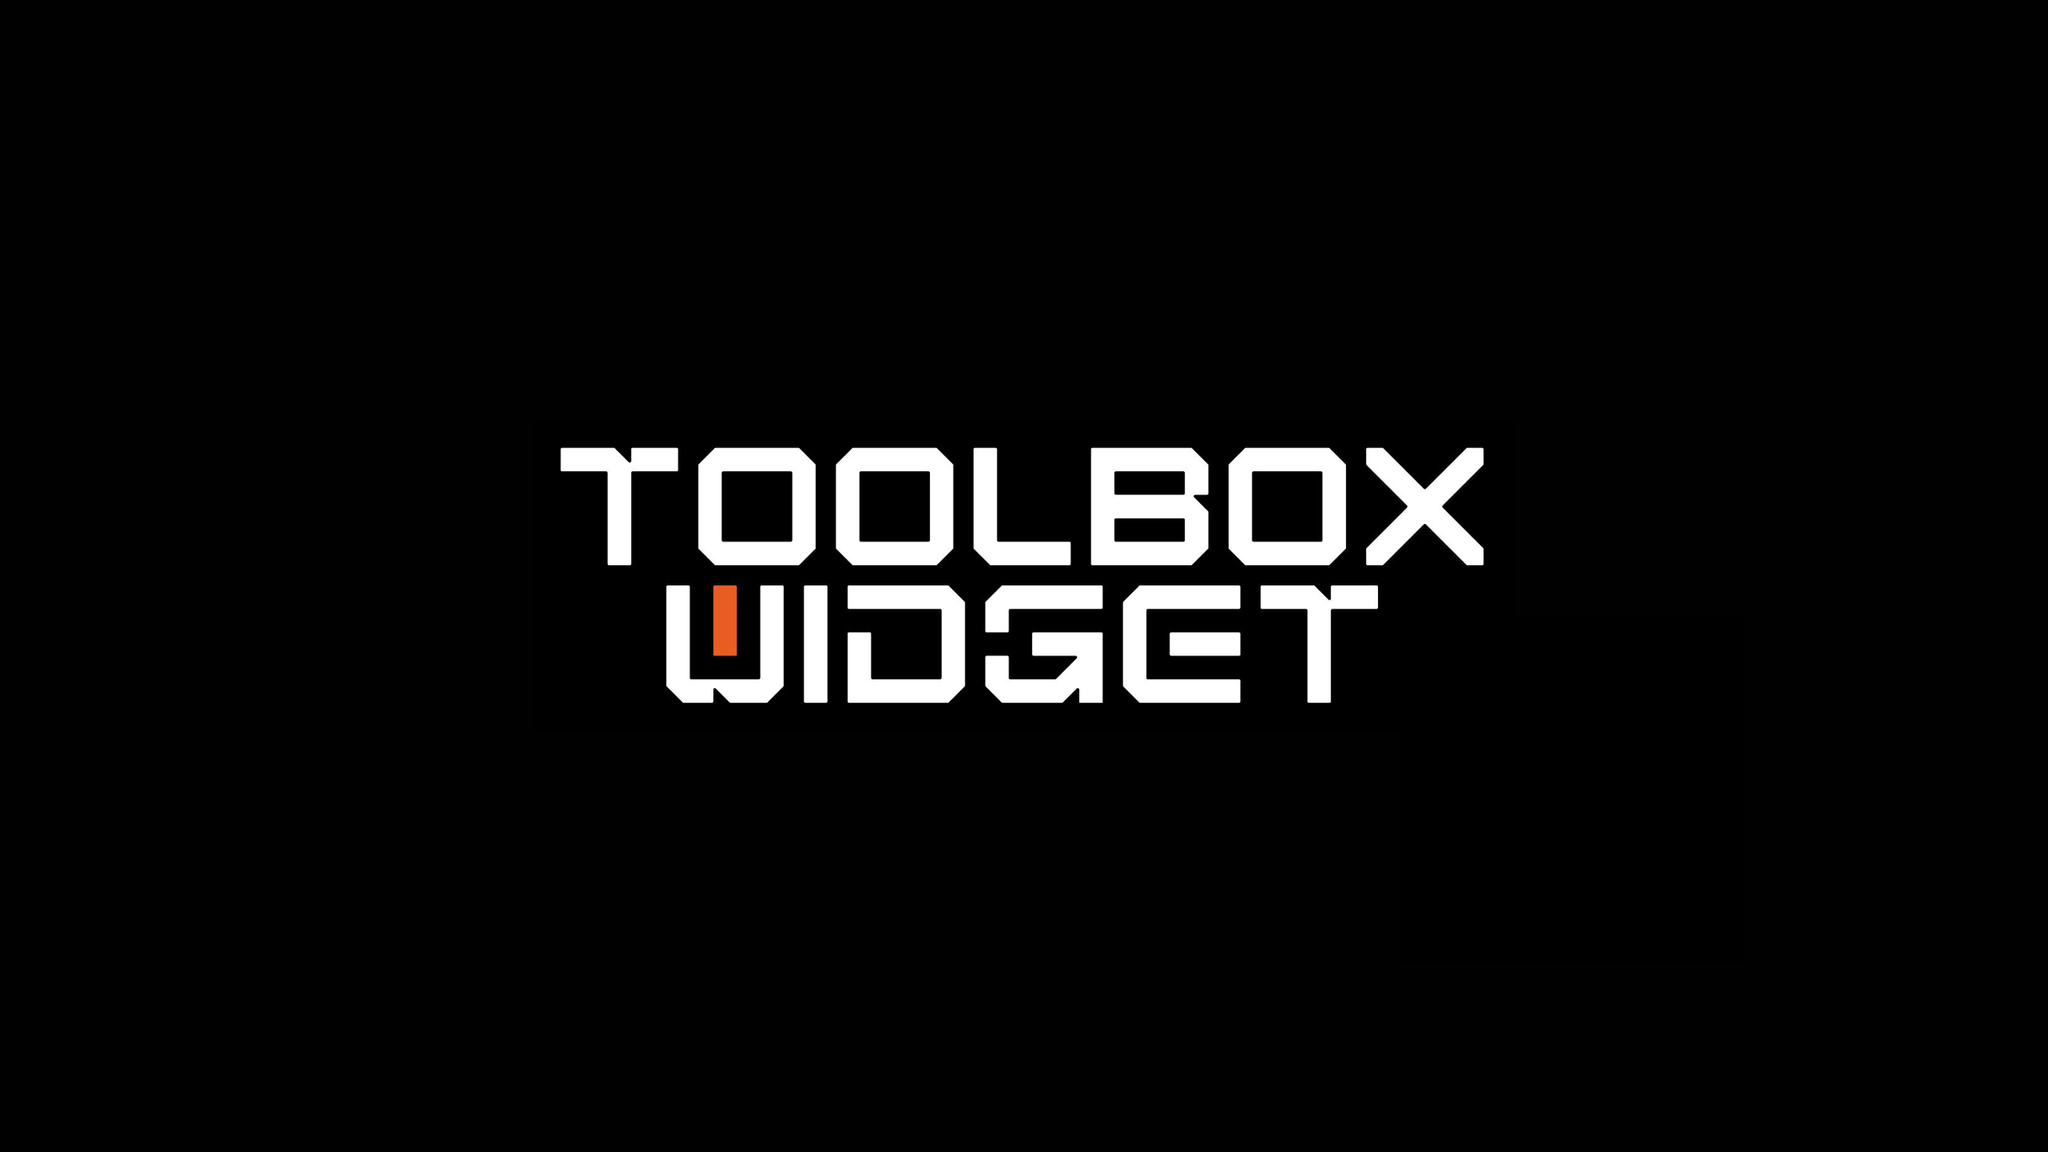 ToolBox Widget Canada